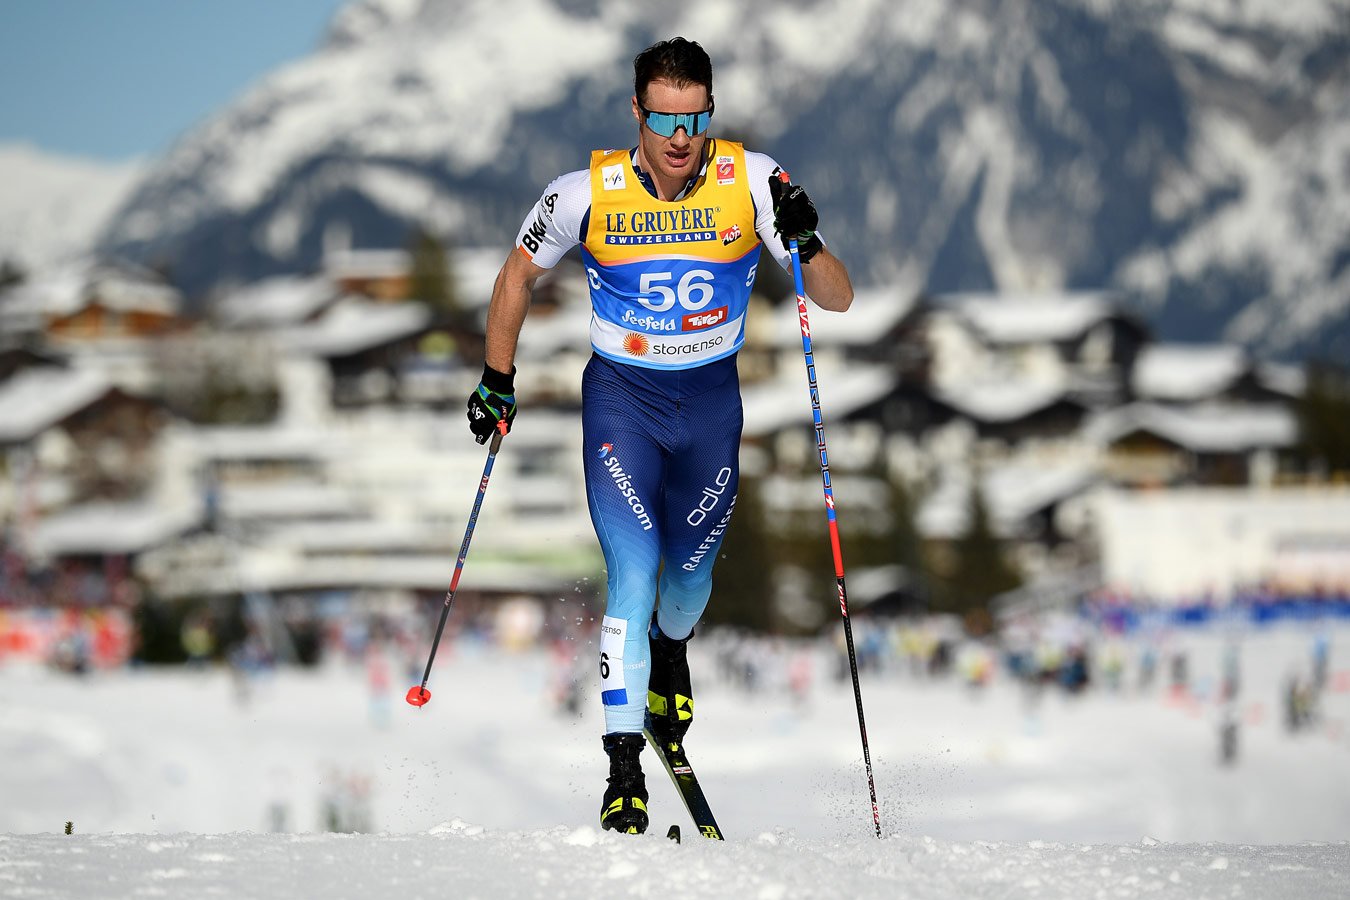 Видео скиатлона сегодня мужчины. Дарио Колонья. Дарио Колонья швейцарский лыжник. Швейцария Колонья. Лыжные гонки скиатлон.